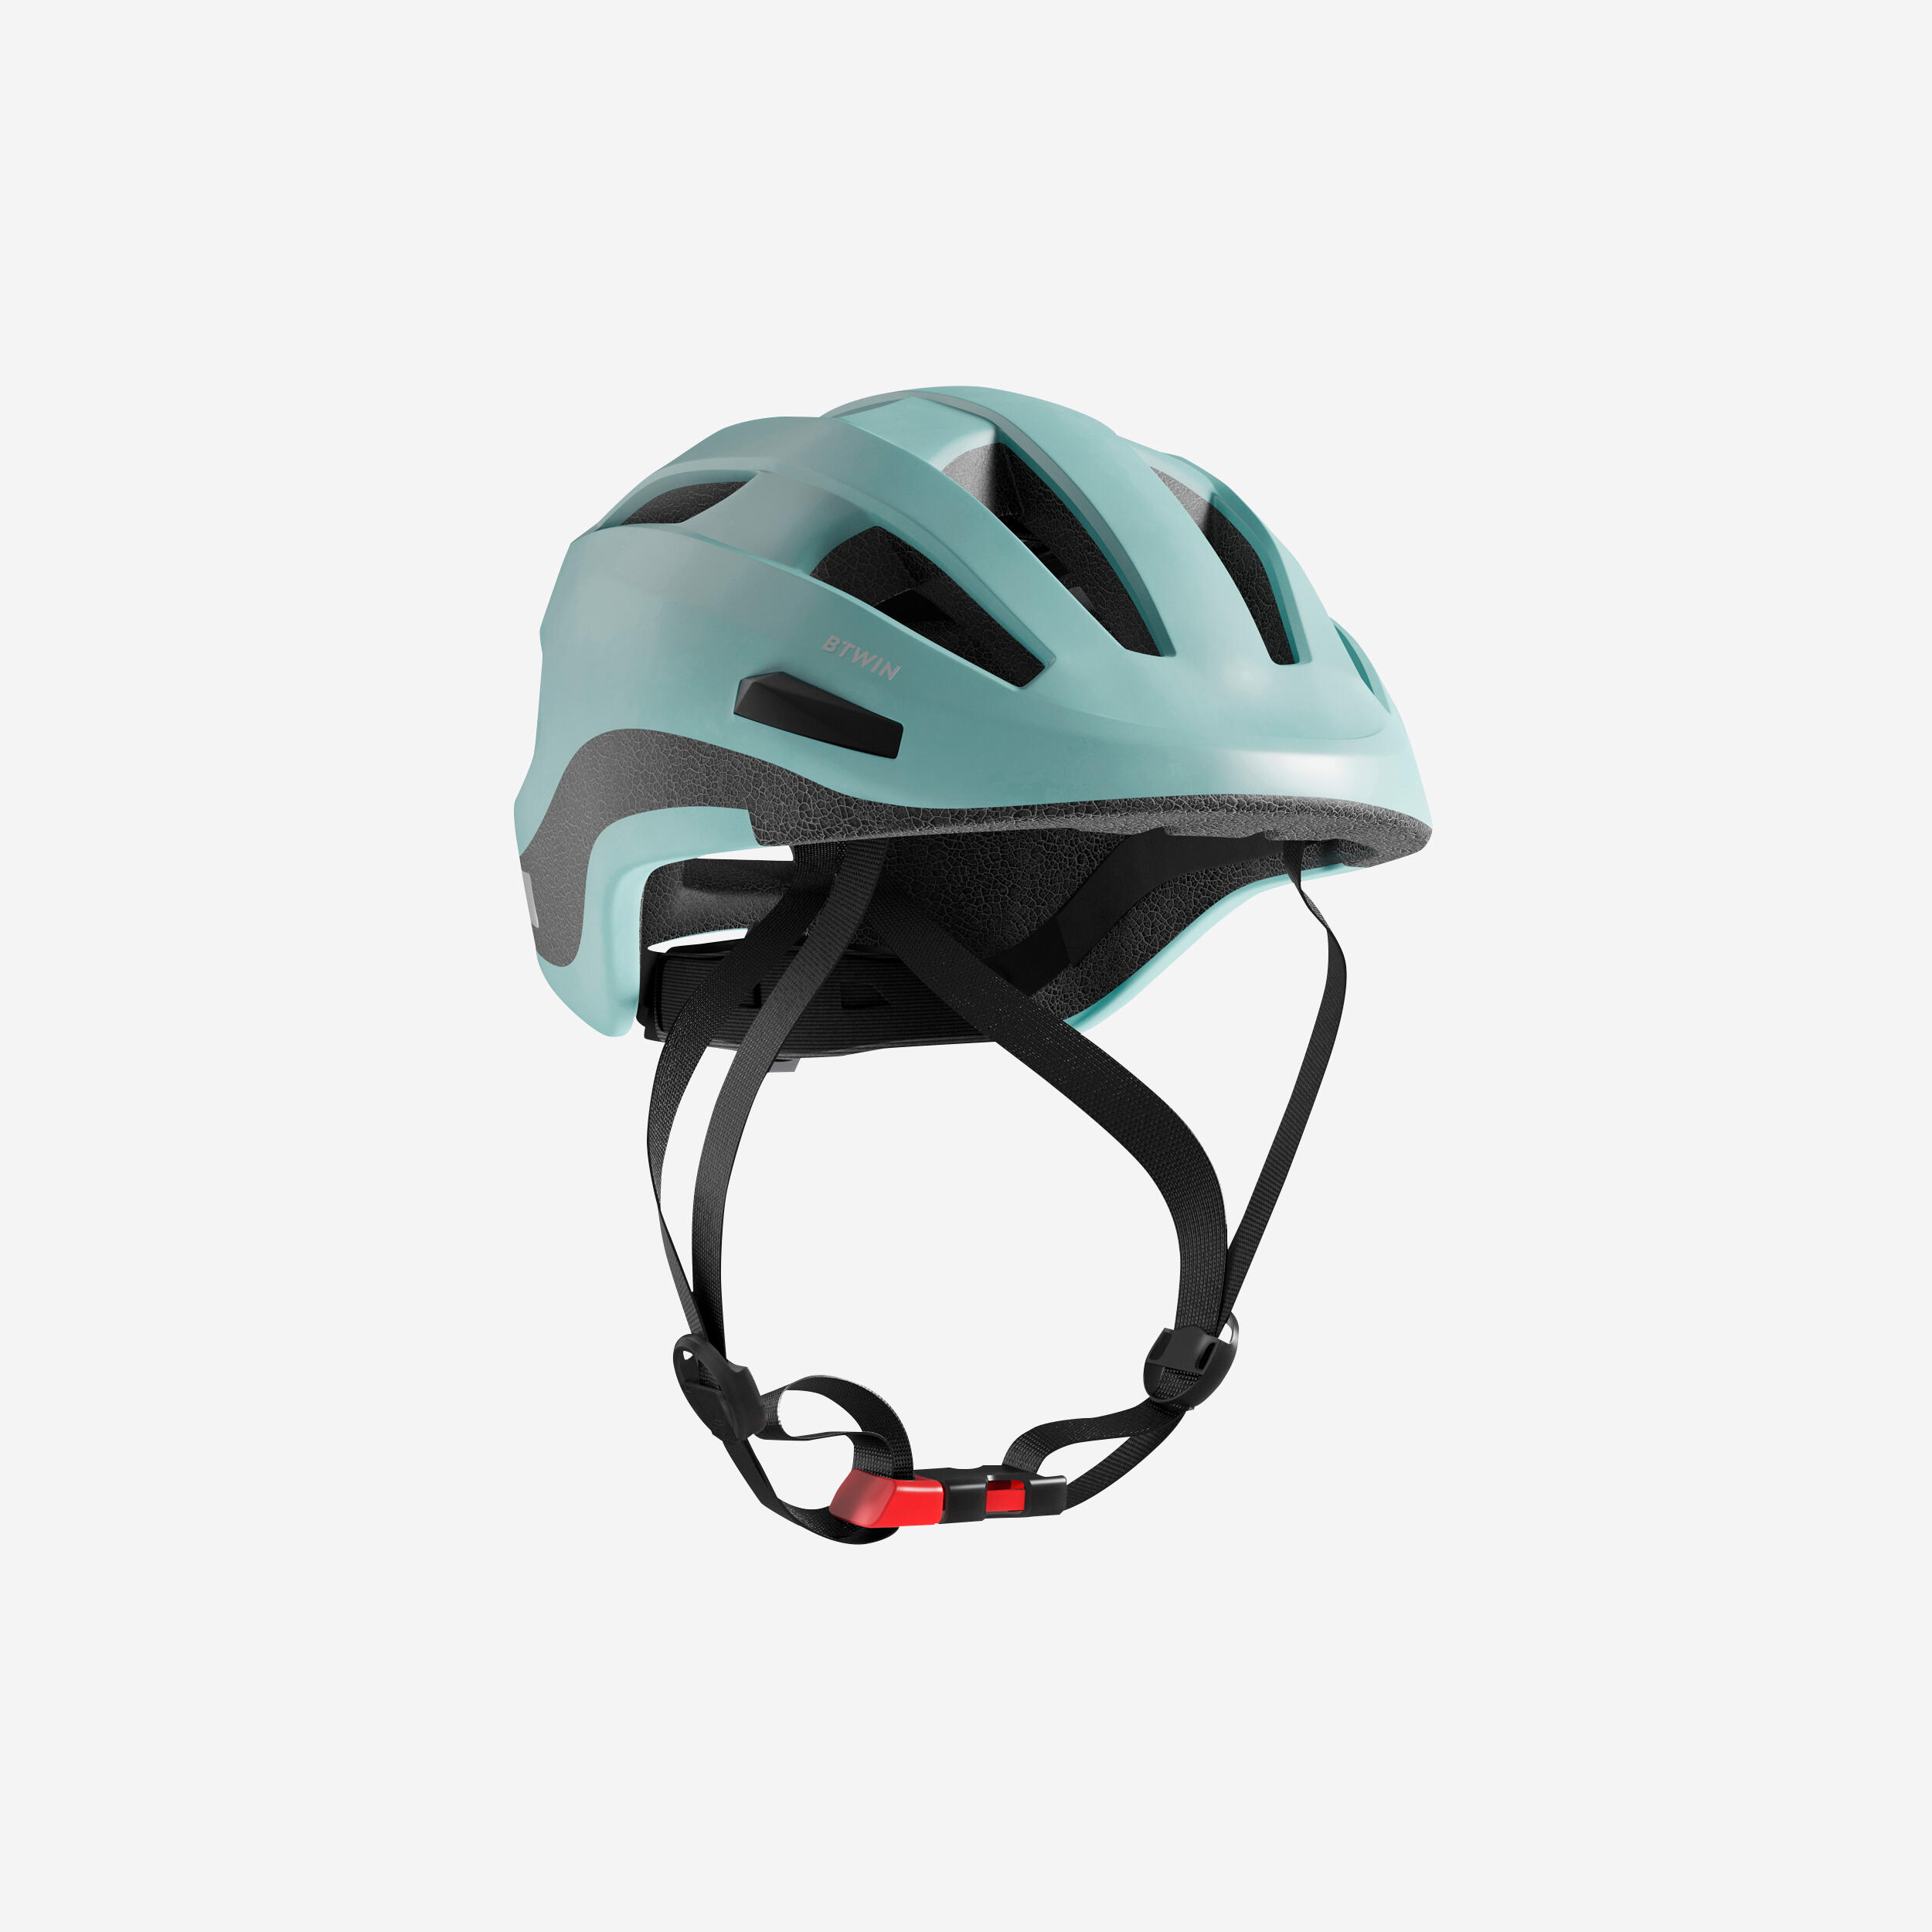 City Cycling Helmet 500 - Green 1/6